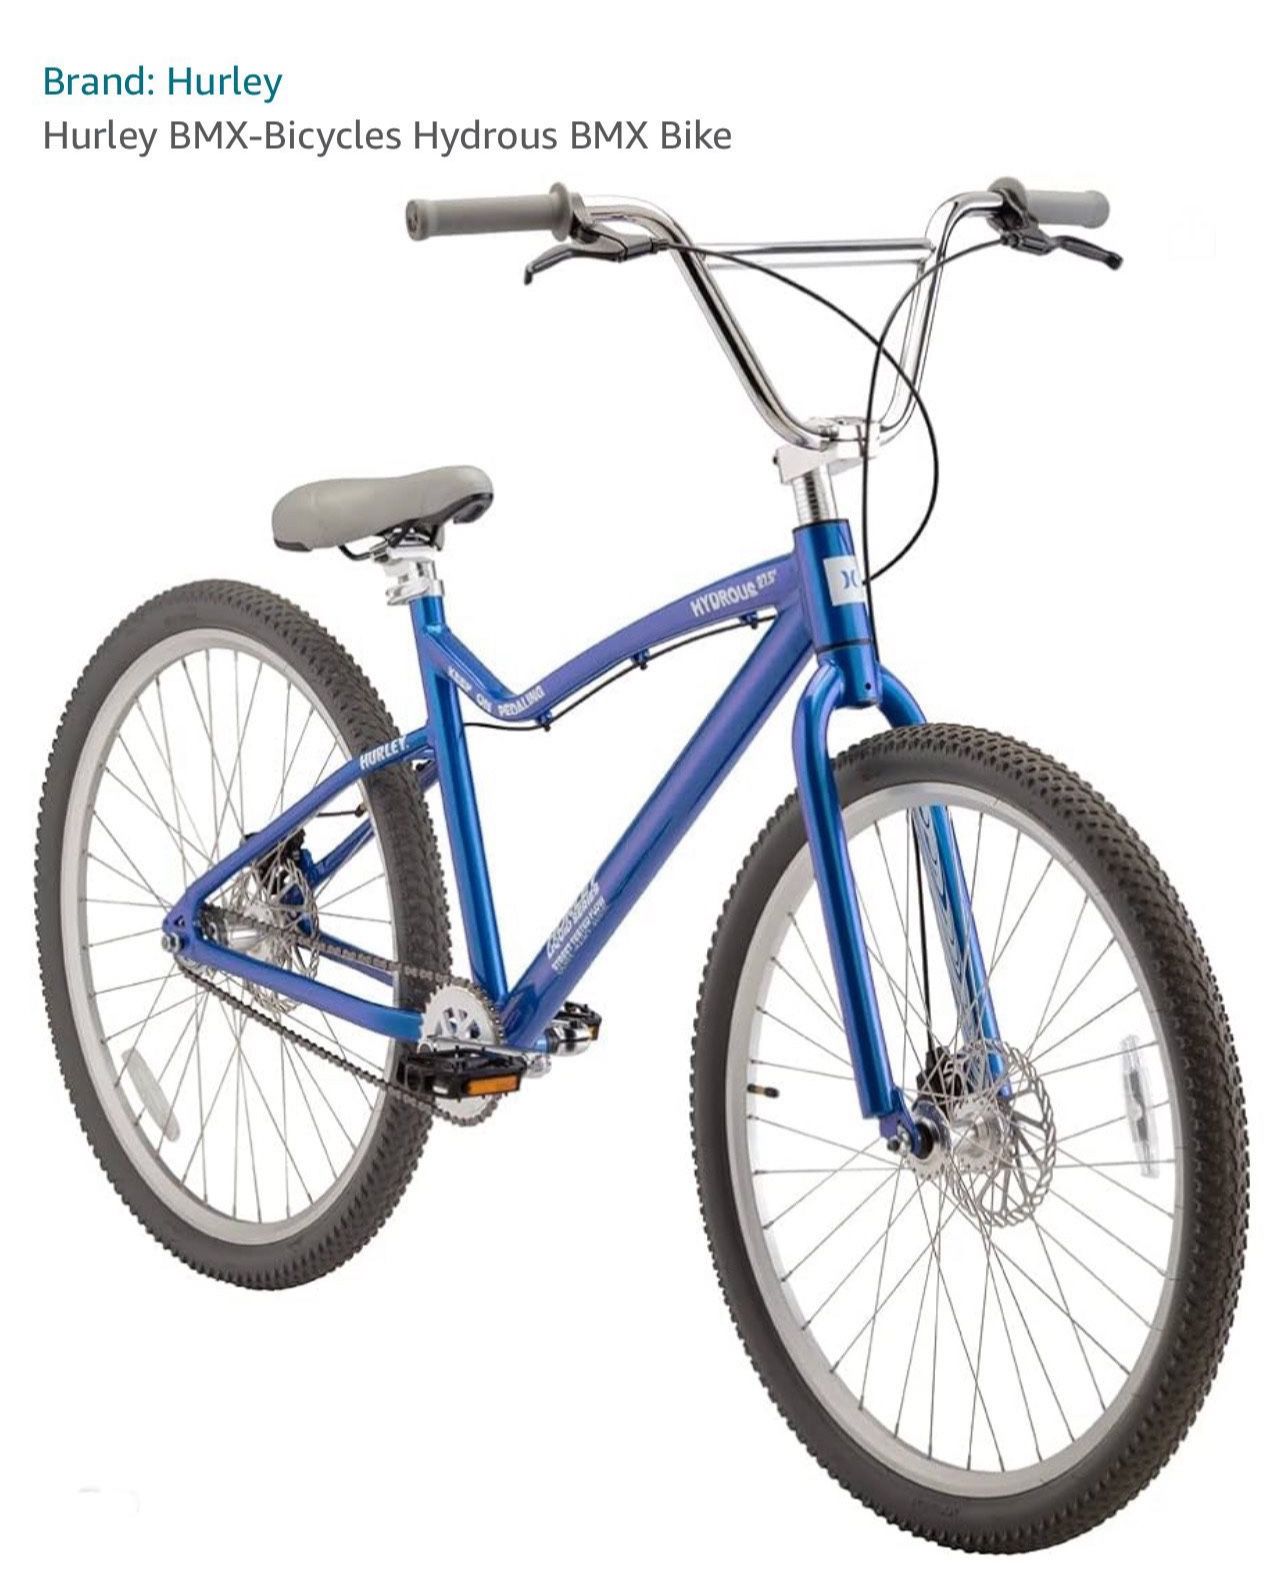 NIB Hurley Hydrous 27.5 inch Street BMX Bike, Metallic Blue